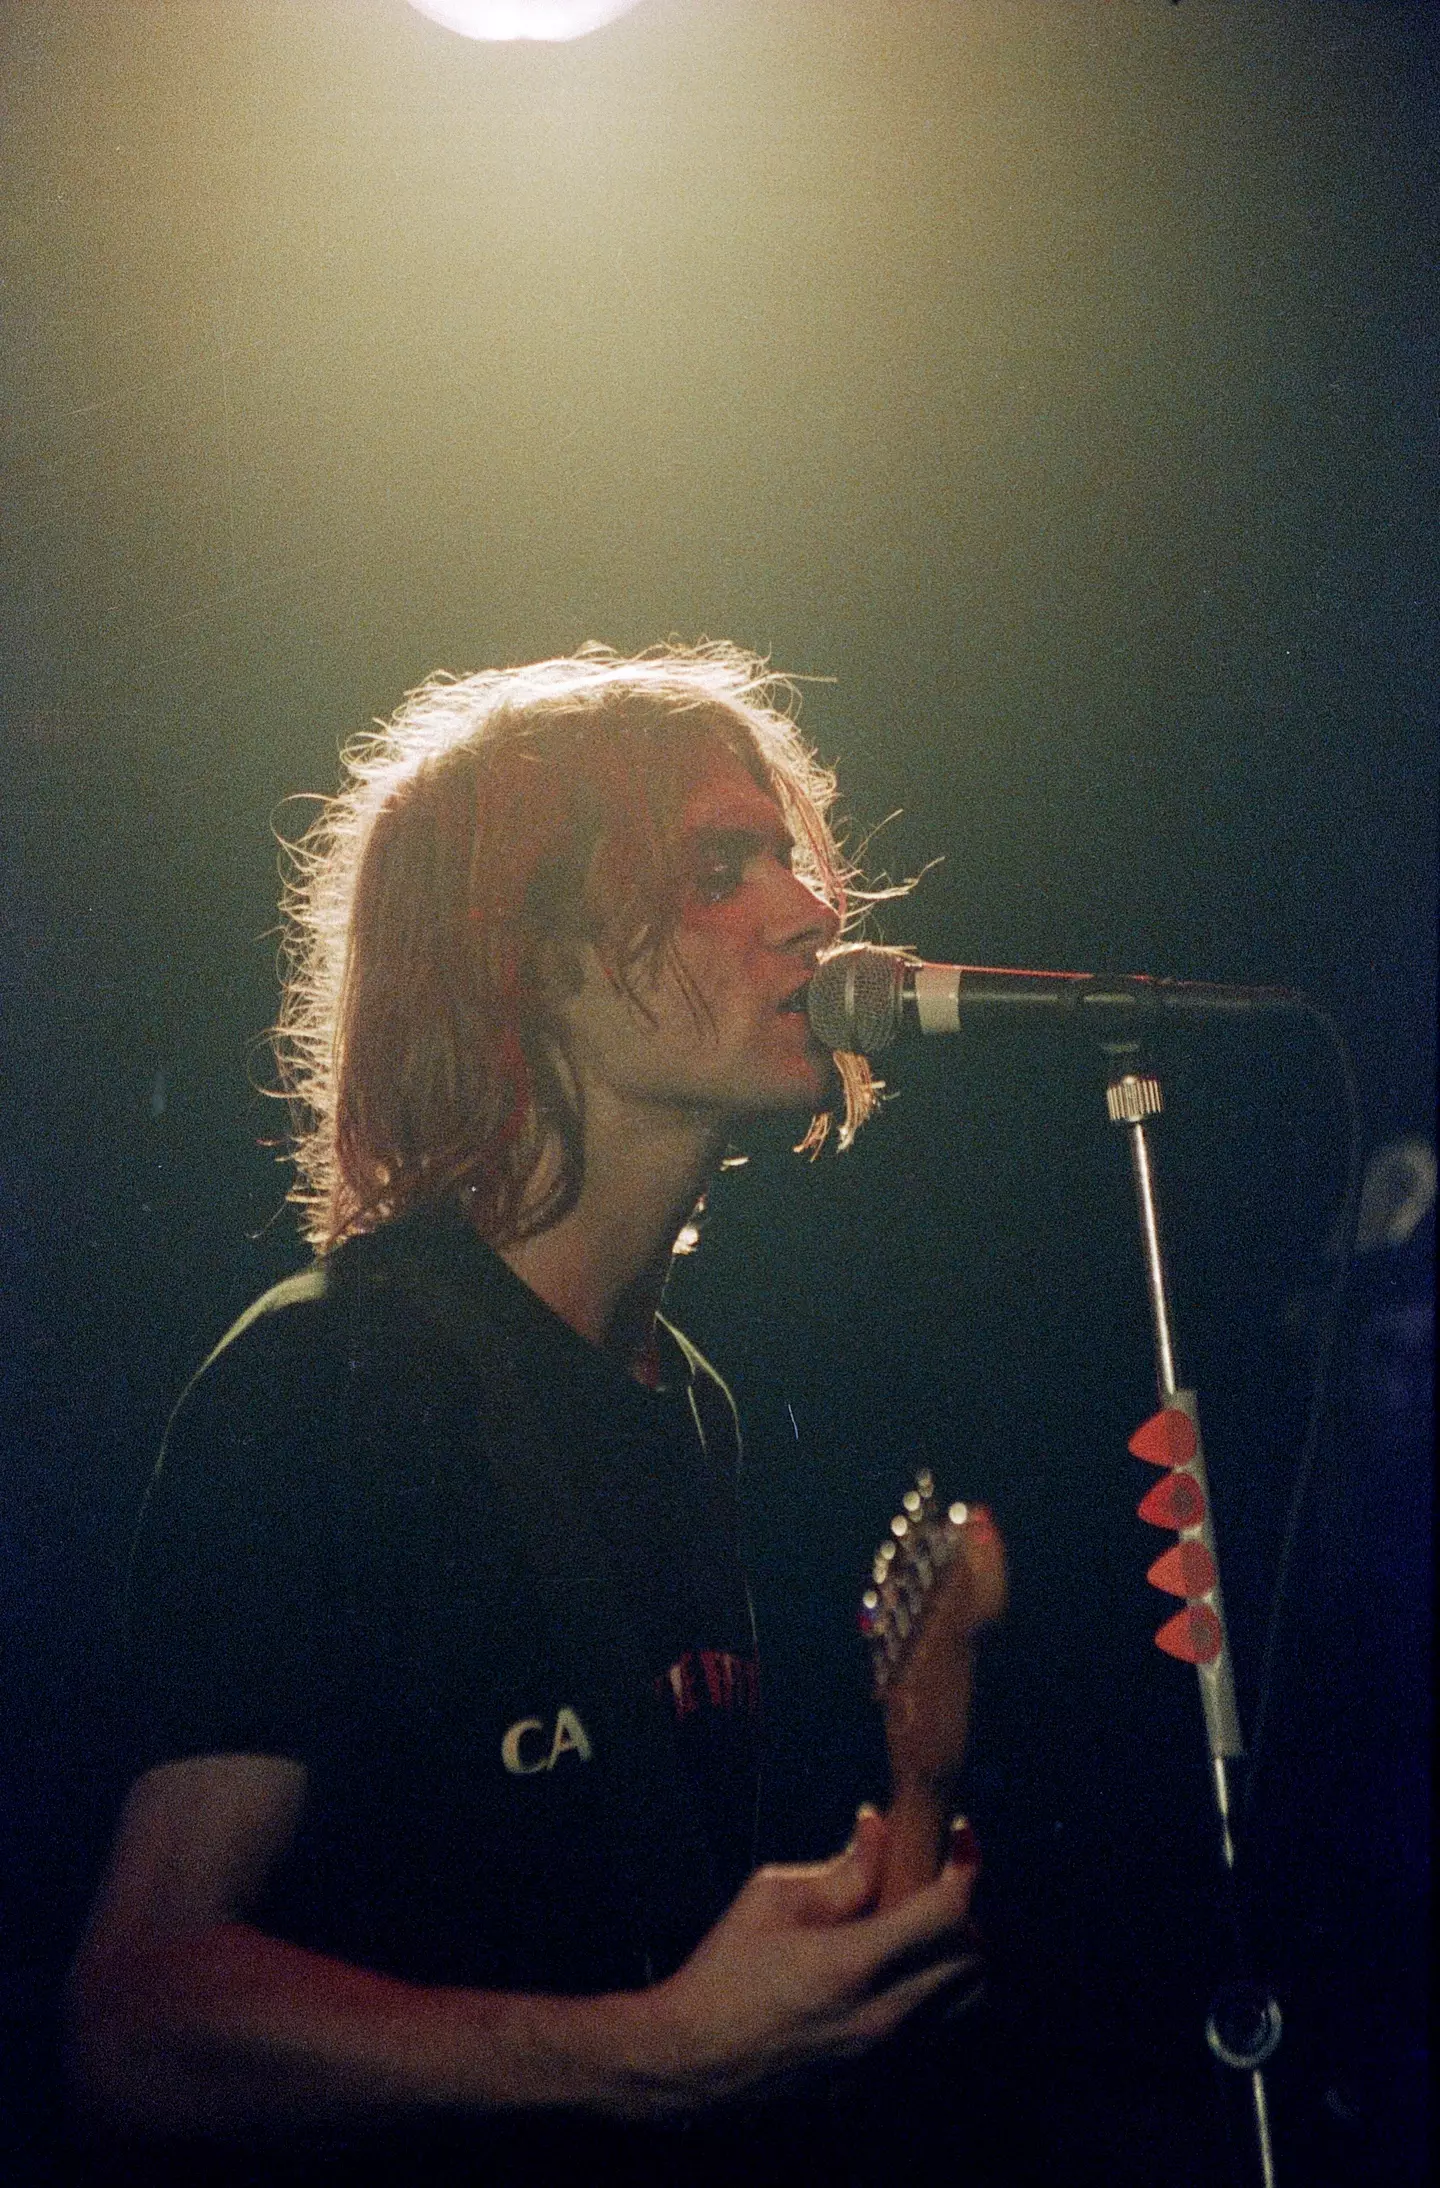 Spencer Elden filled a lawsuit against the band, including the estate of Nirvana lead singer Kurt Cobain.